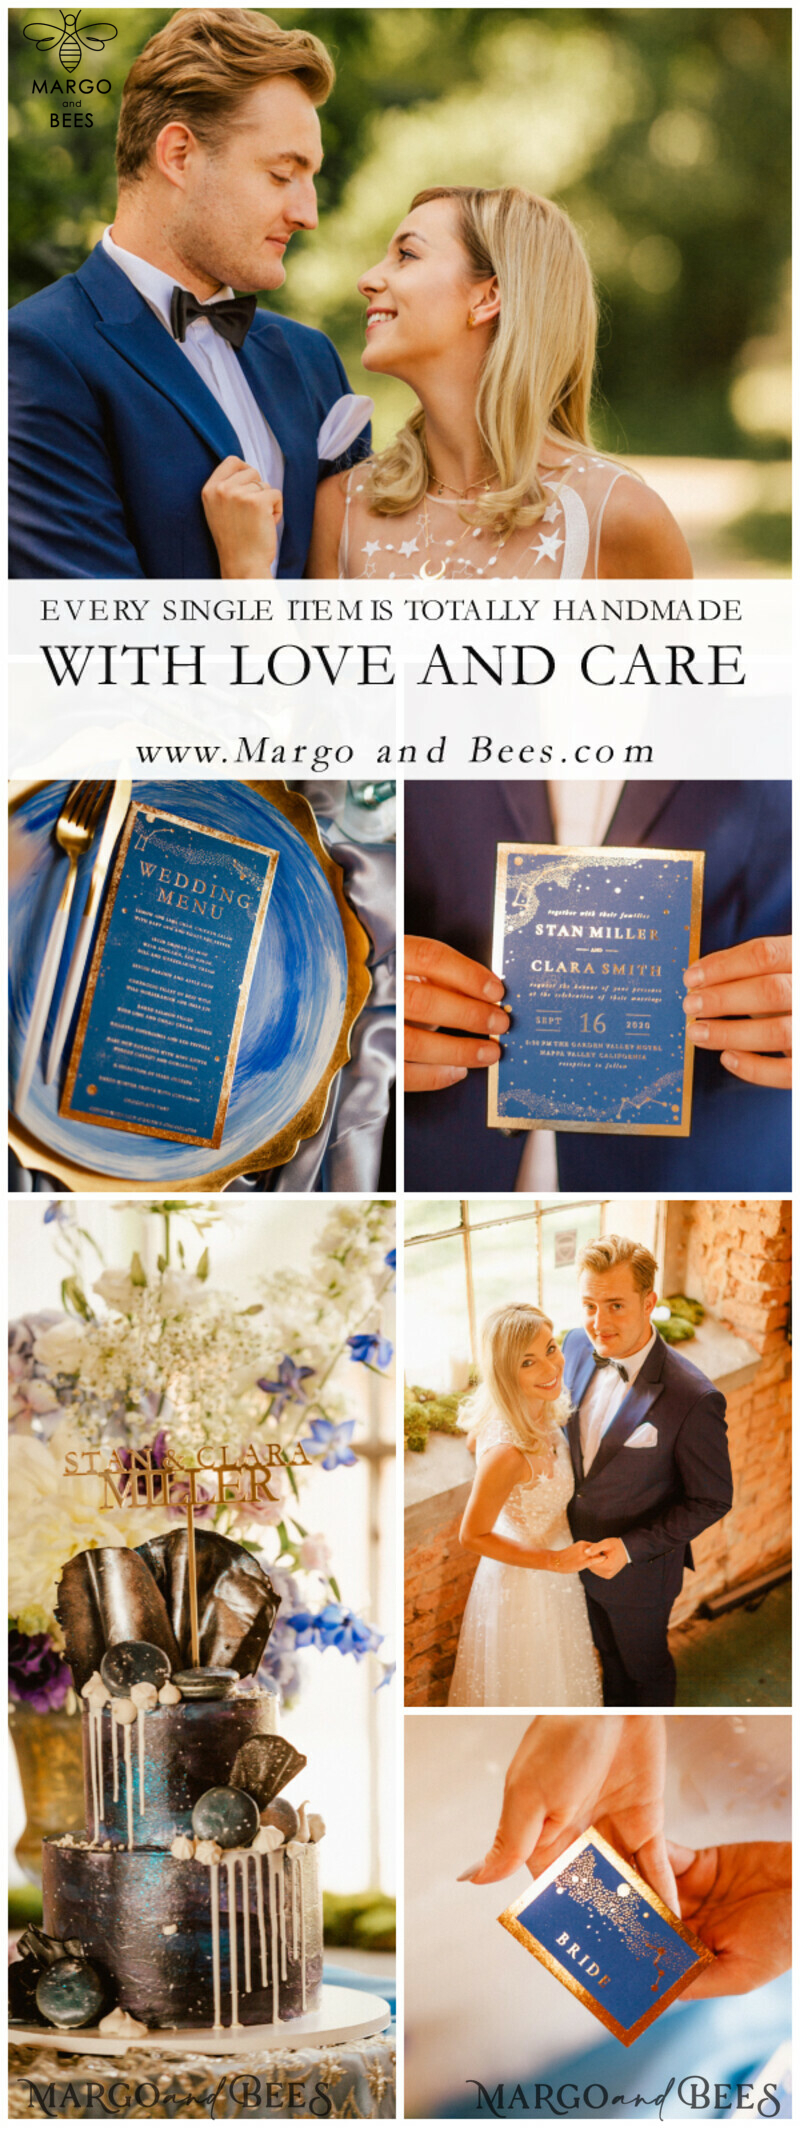 Luxury Golden Shine Wedding Invitations: Royal Navy Blue Wedding Invites with Glamour Gold Foil Details - Elegant and Bespoke Galaxy Wedding Invitation Suite-10